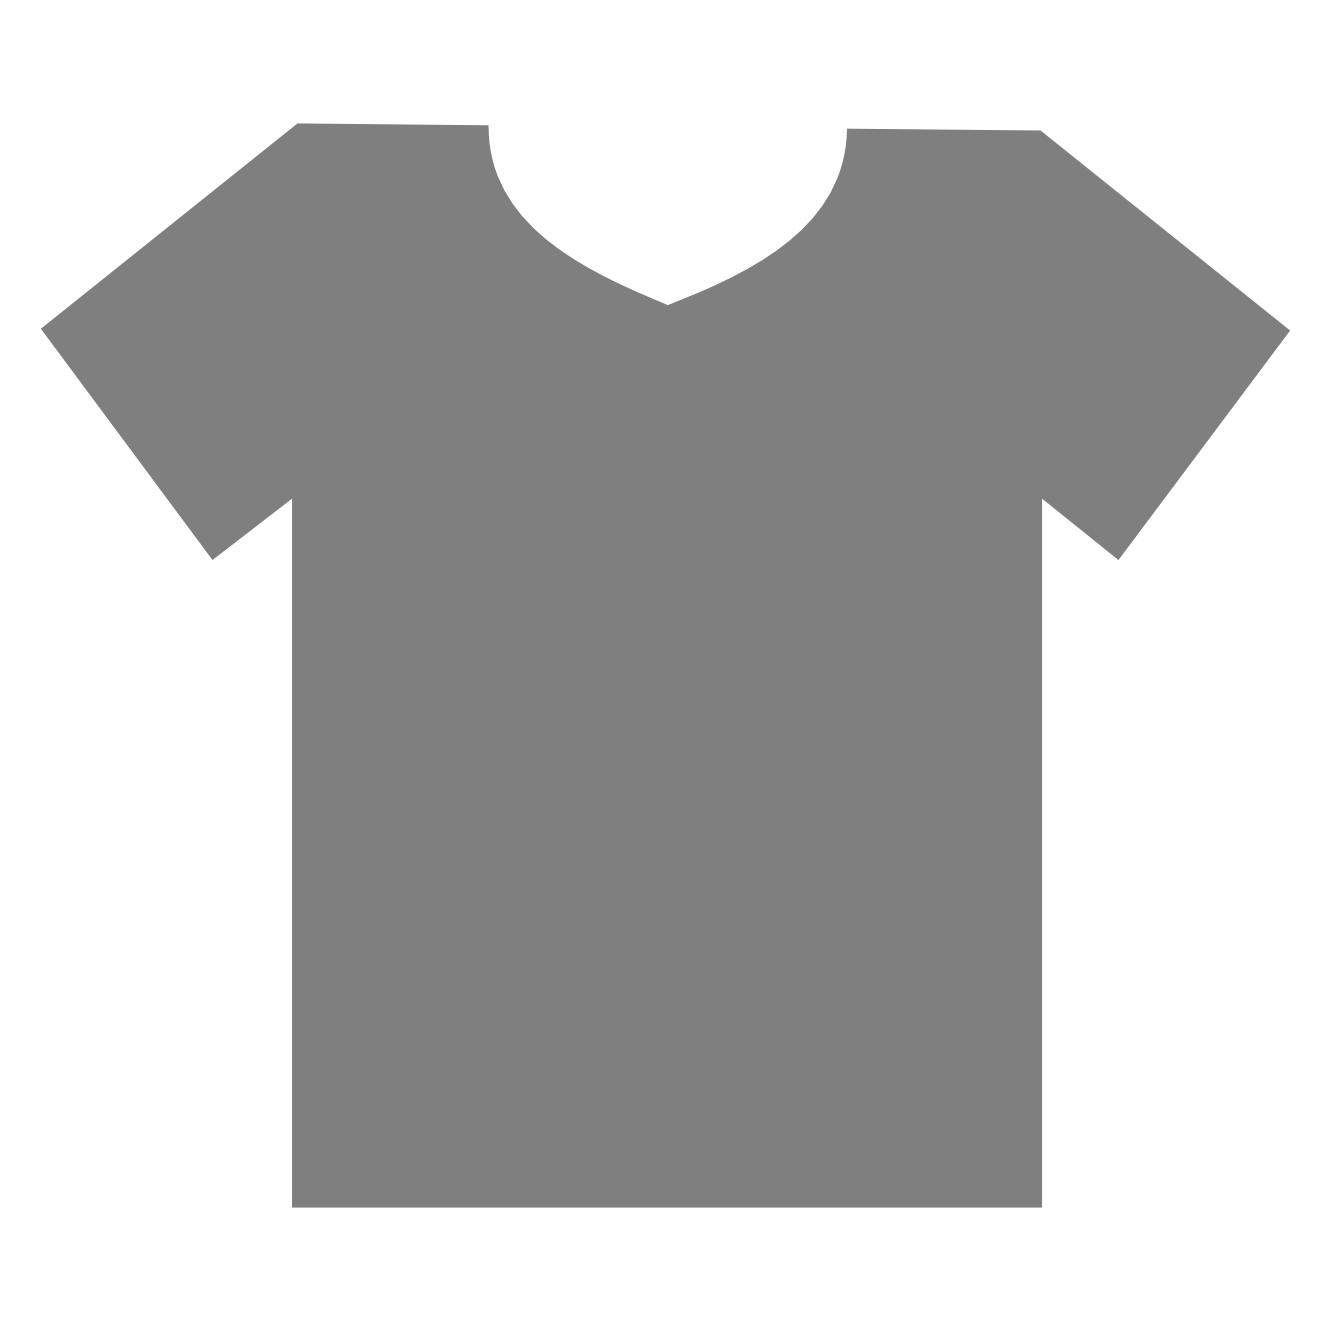 T Shirt Outline Clip Art - Clipart library